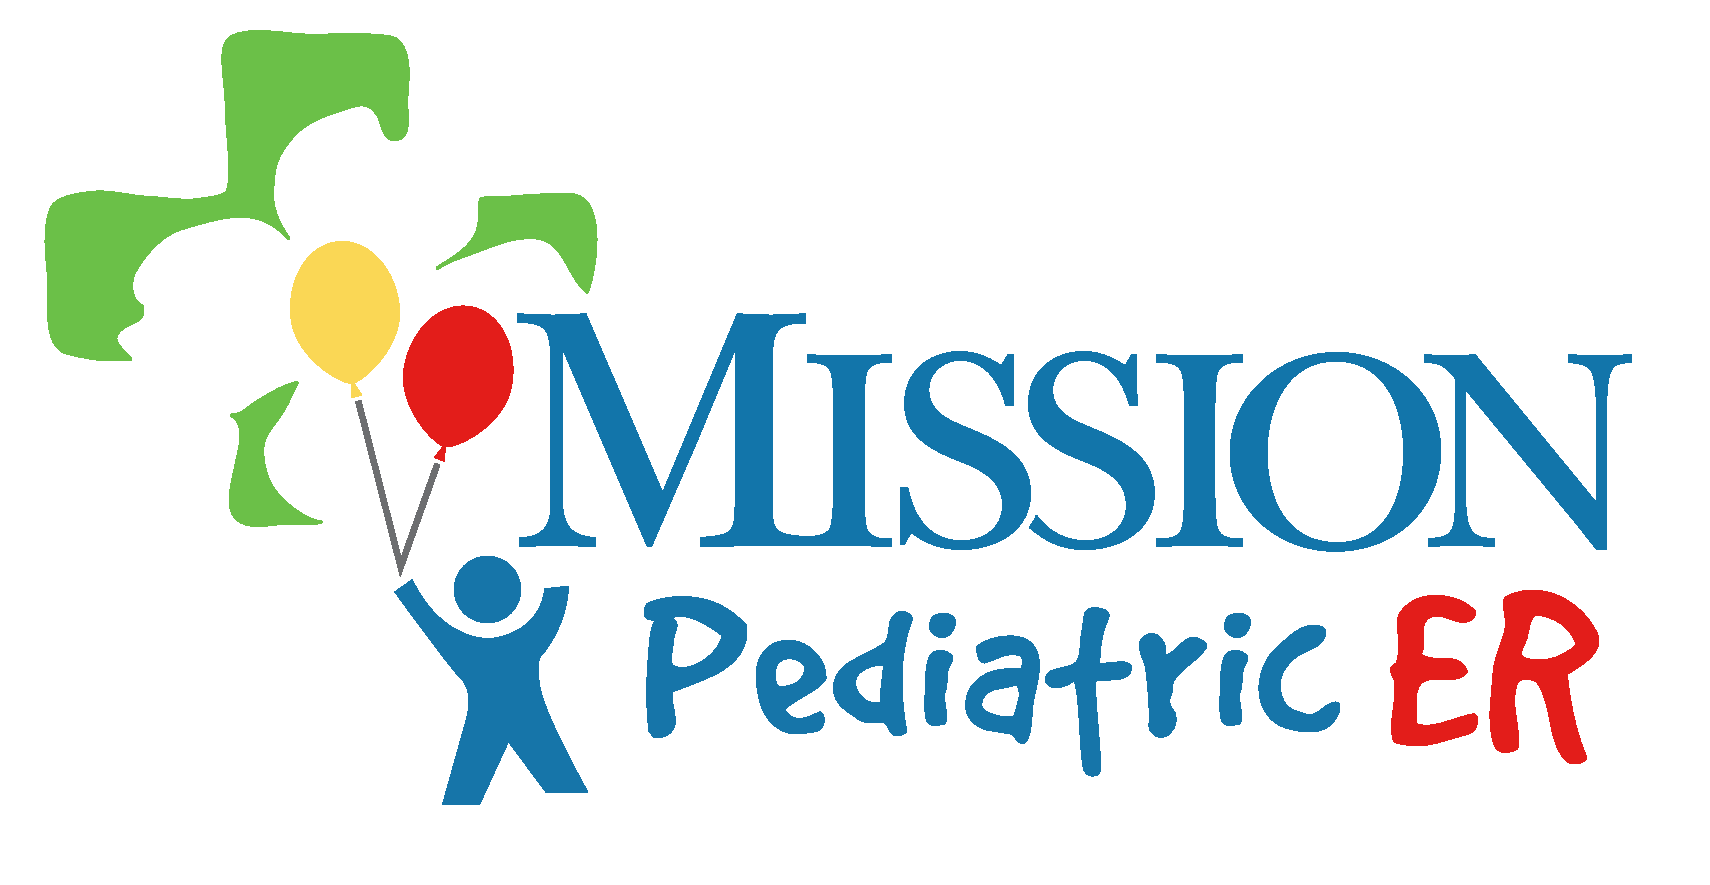 Mission Pediatric ER